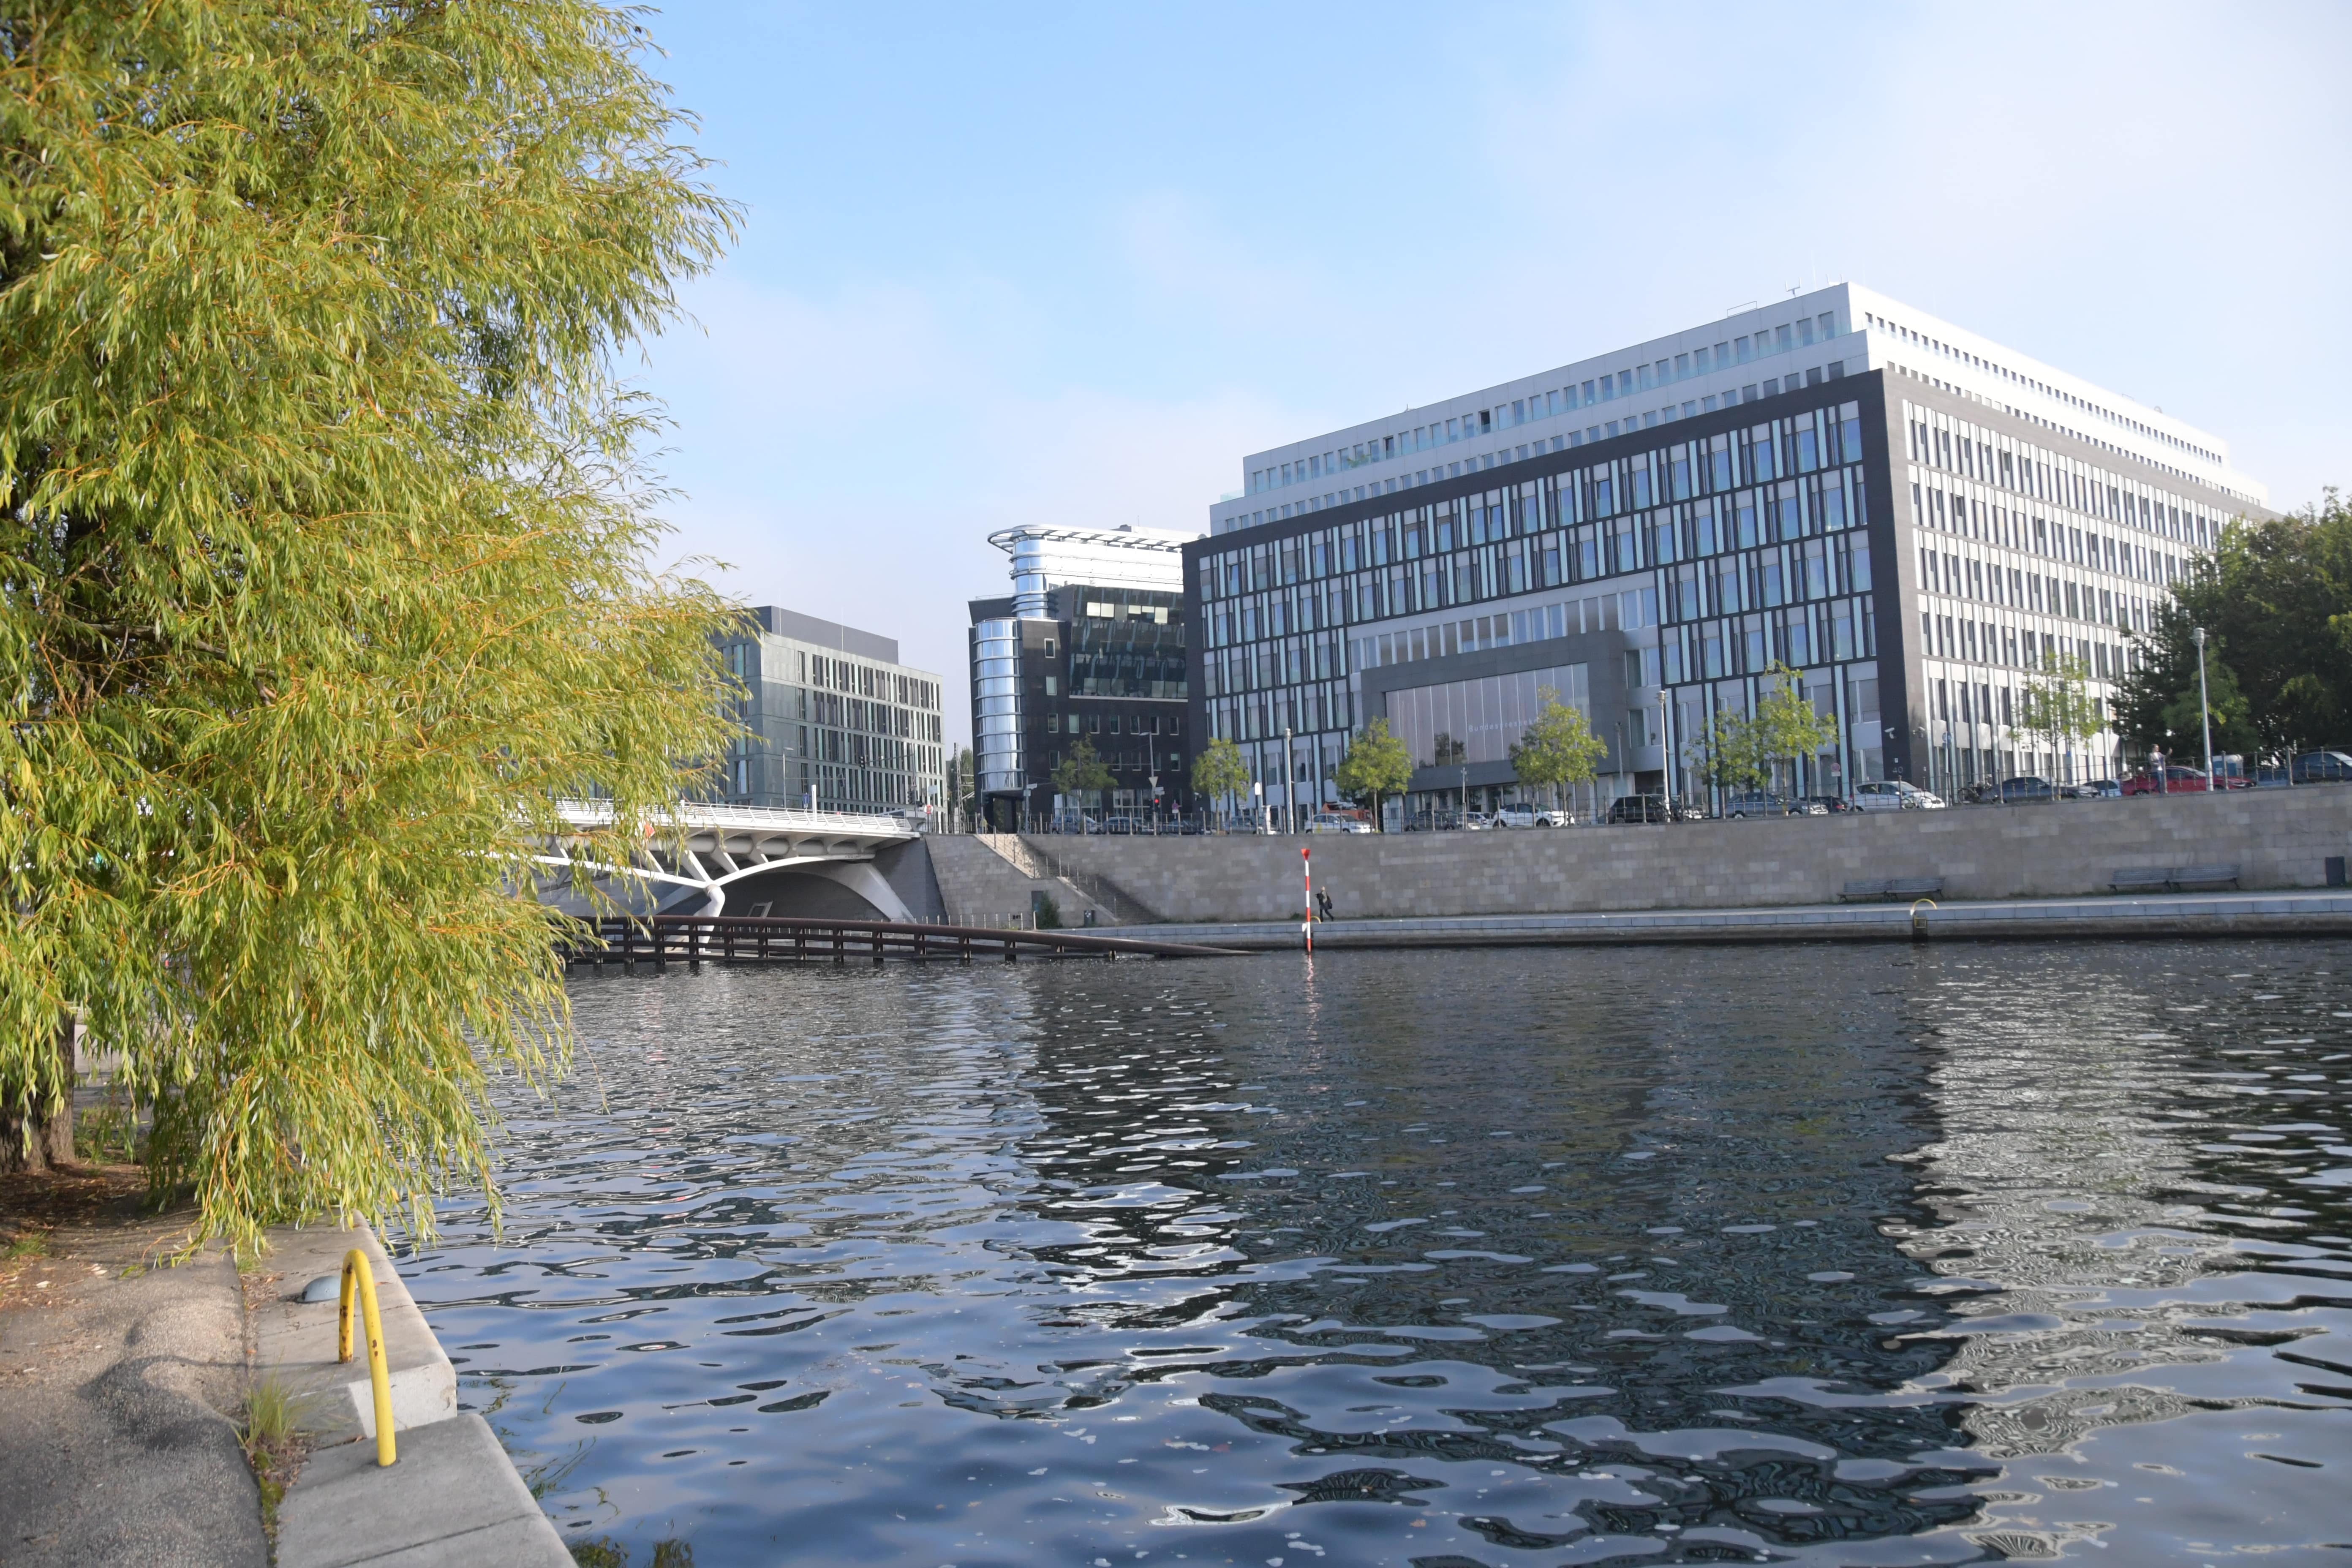 Let’s dive into Berlin’s digital water solutions!